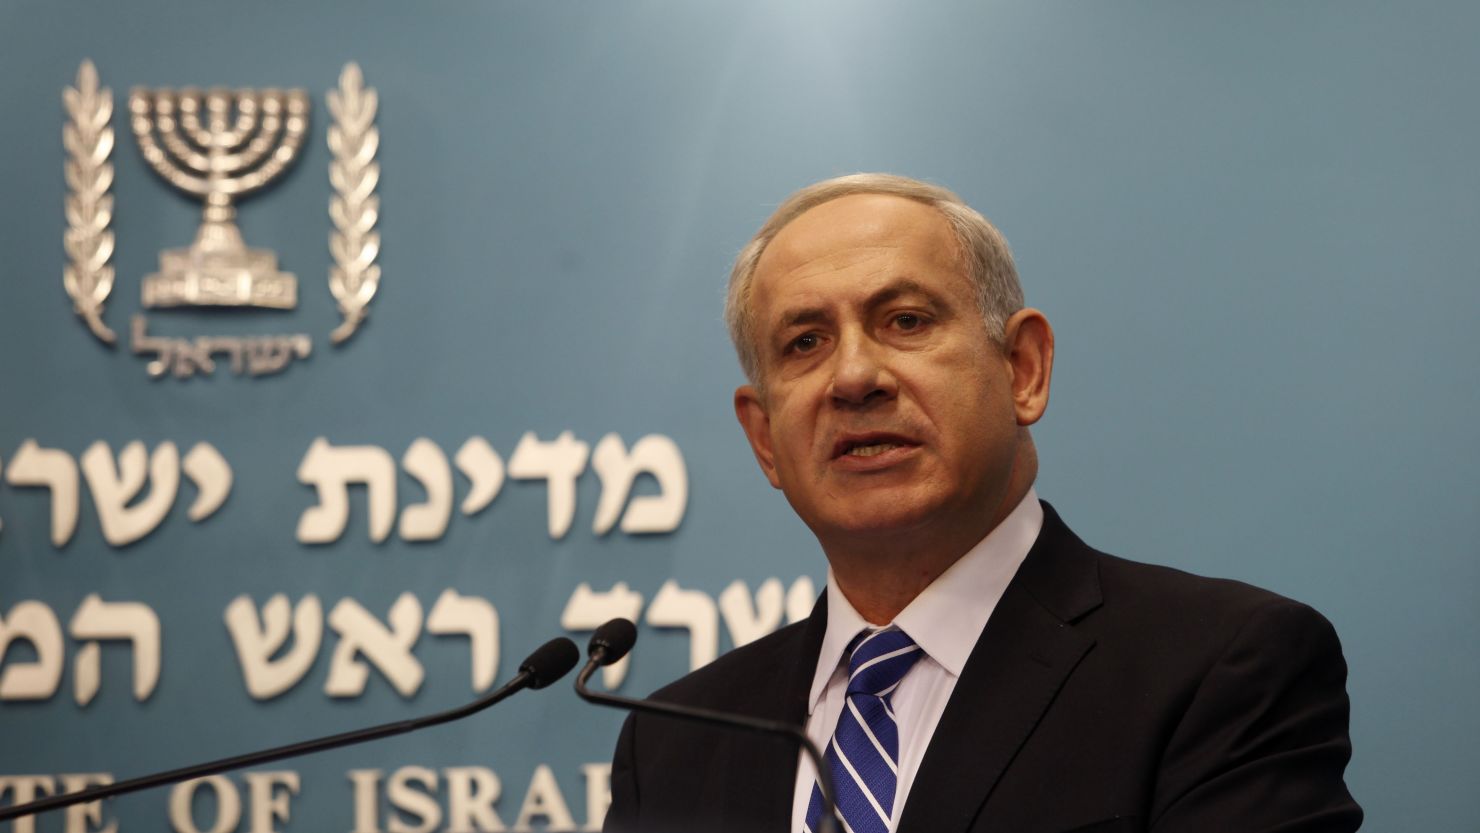 Prime Minister Benjamin Netanyahu is popular among Israelis.